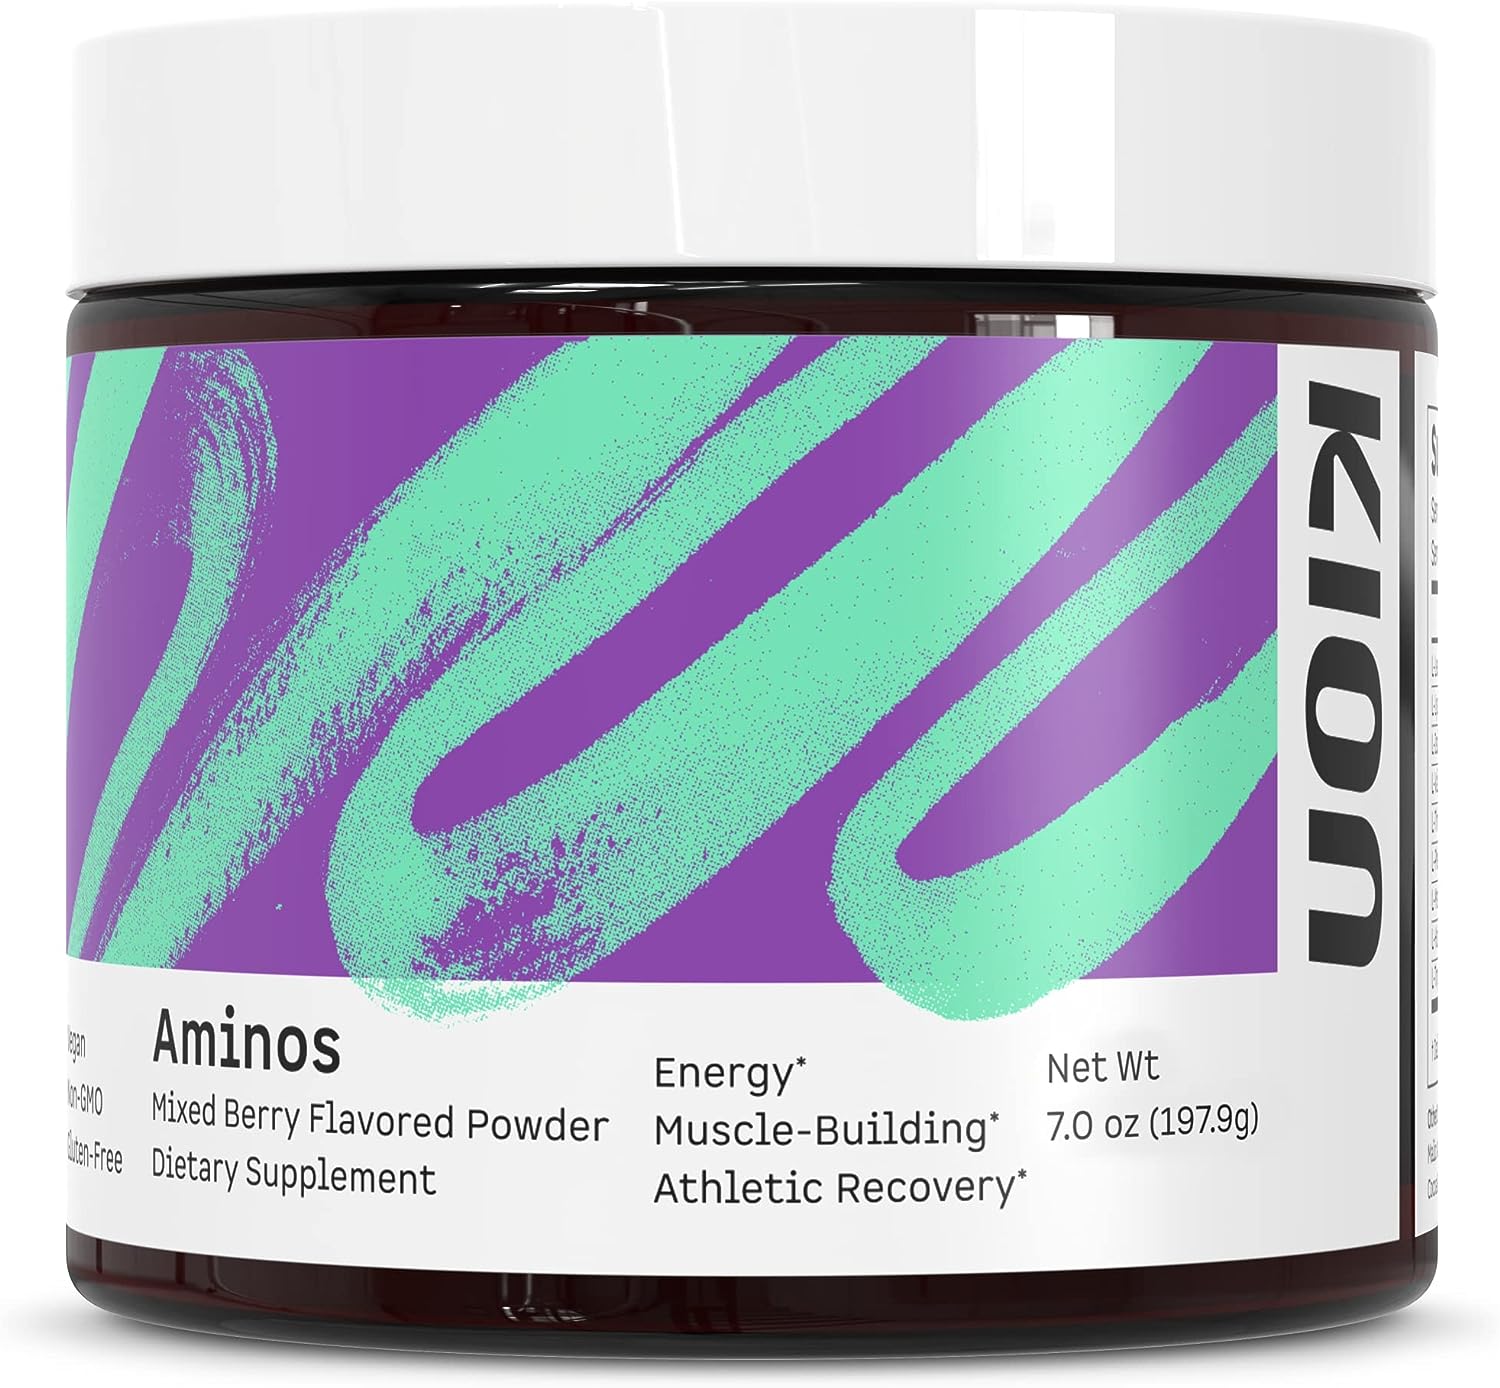 Kion Aminos Essential Amino Acids Powder Supplement | [...]